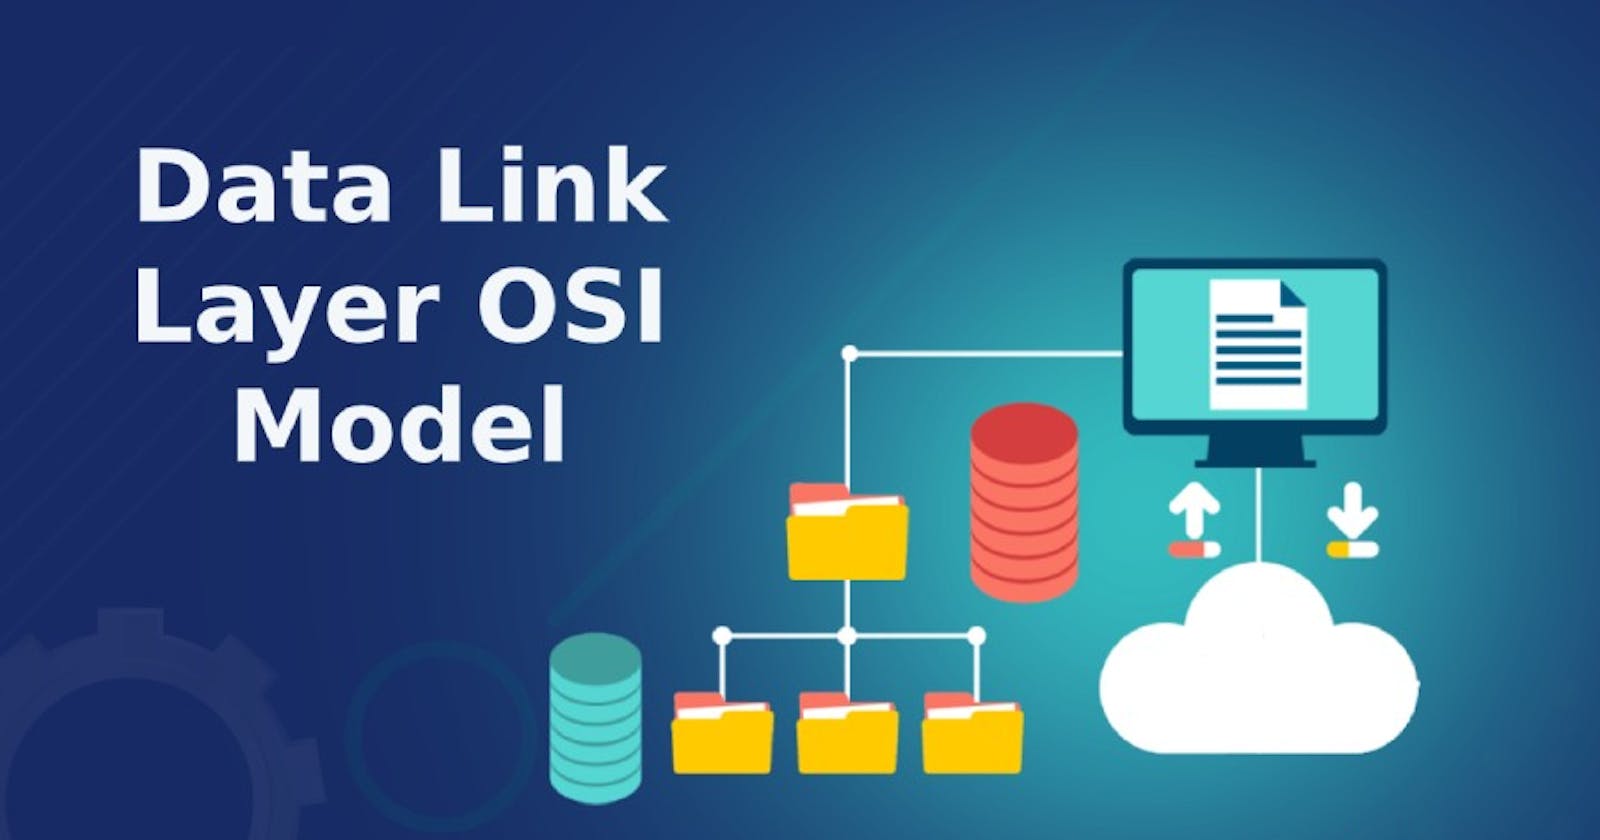 Data link layer of OSI model